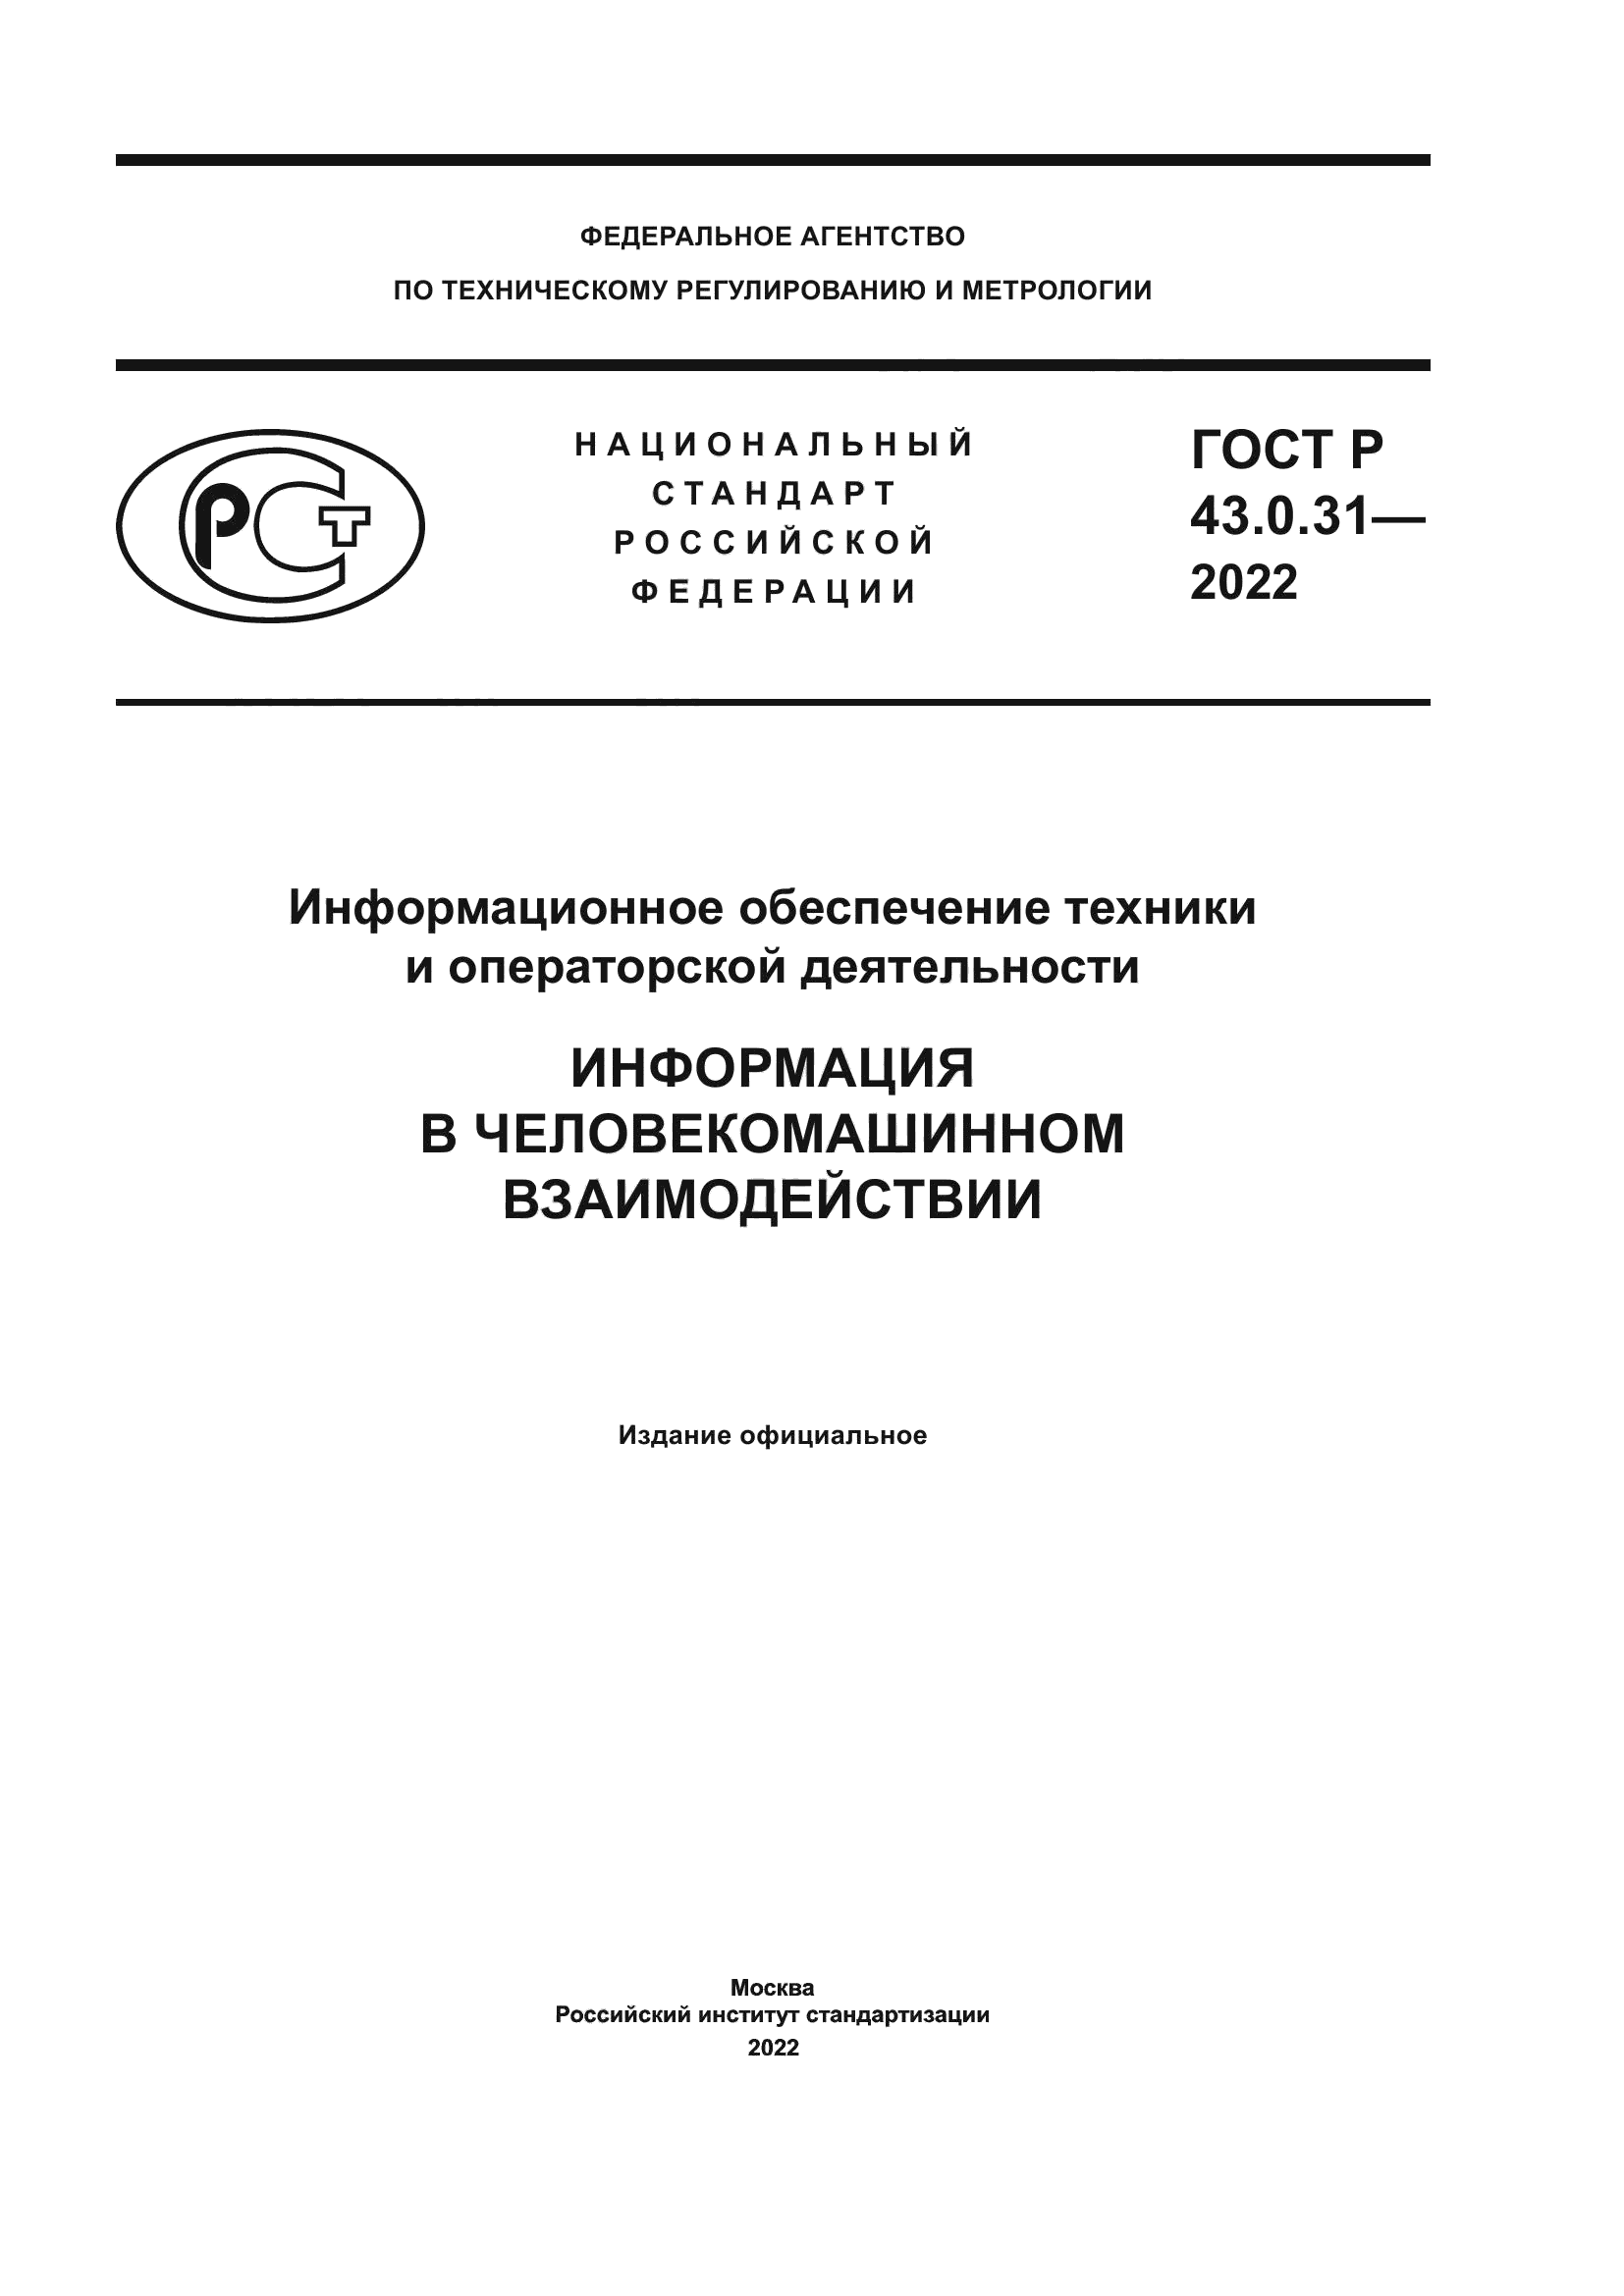 ГОСТ Р 43.0.31-2022